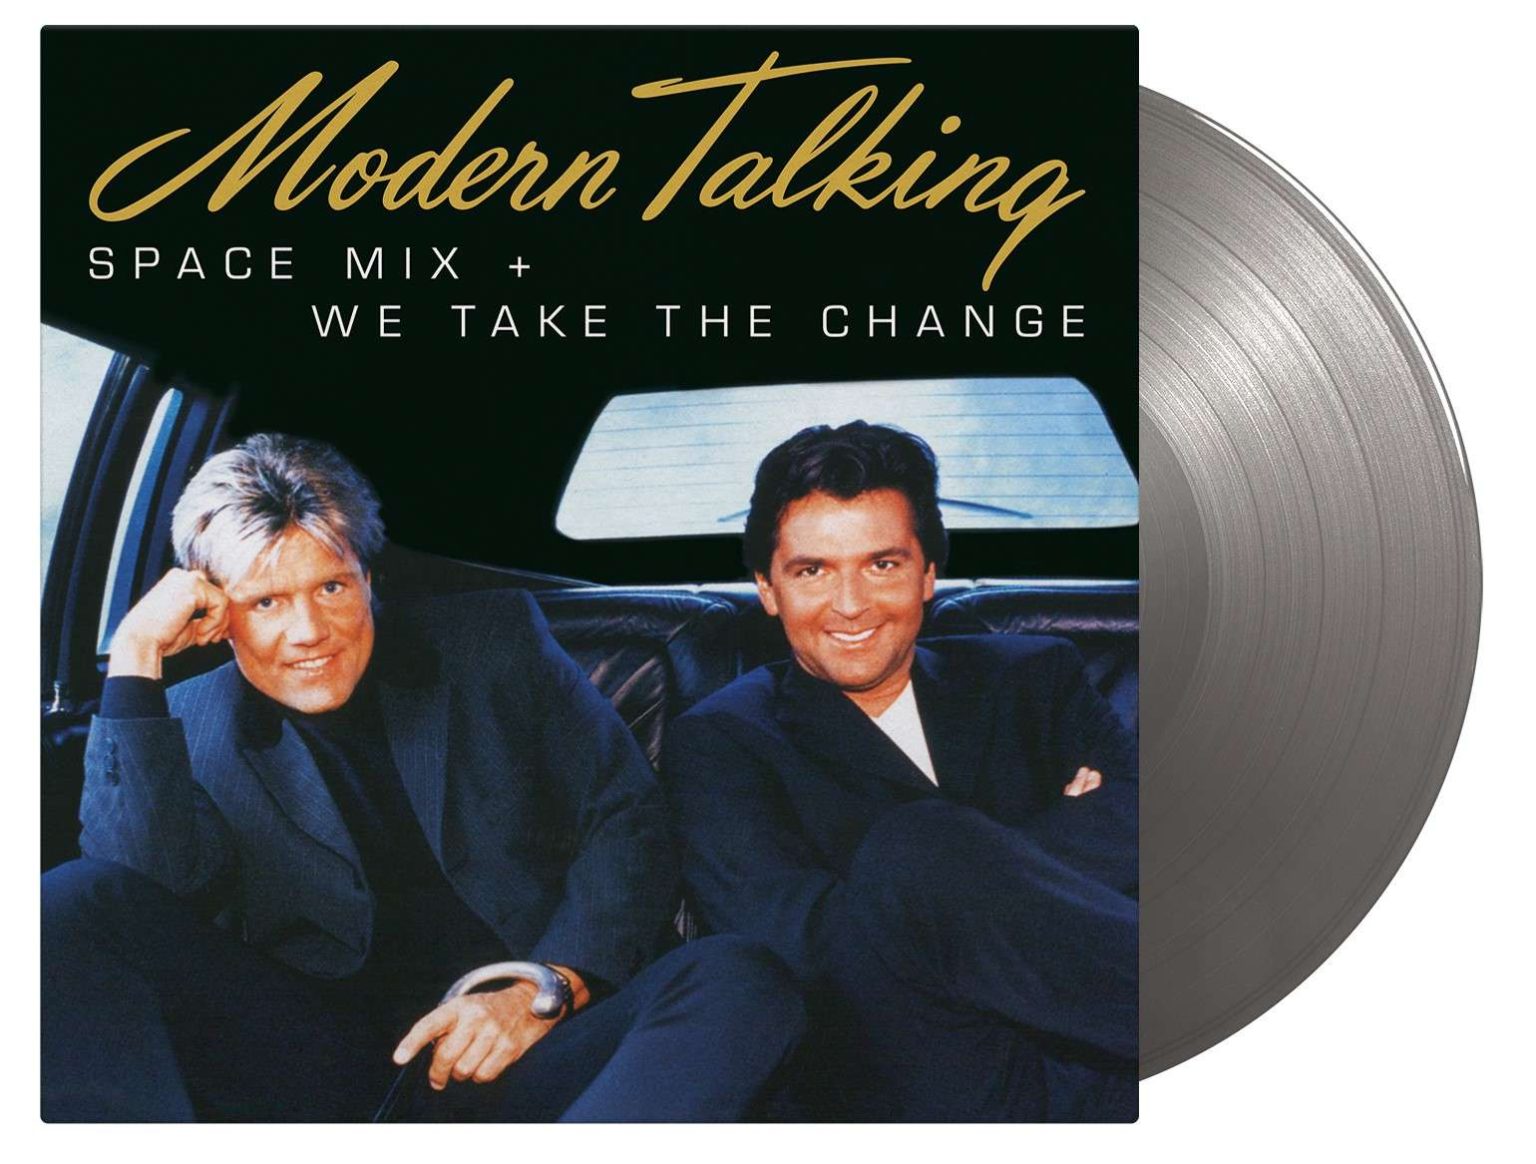 Okładka płyty winylowej artysty Modern Talking o tytule Space Mix